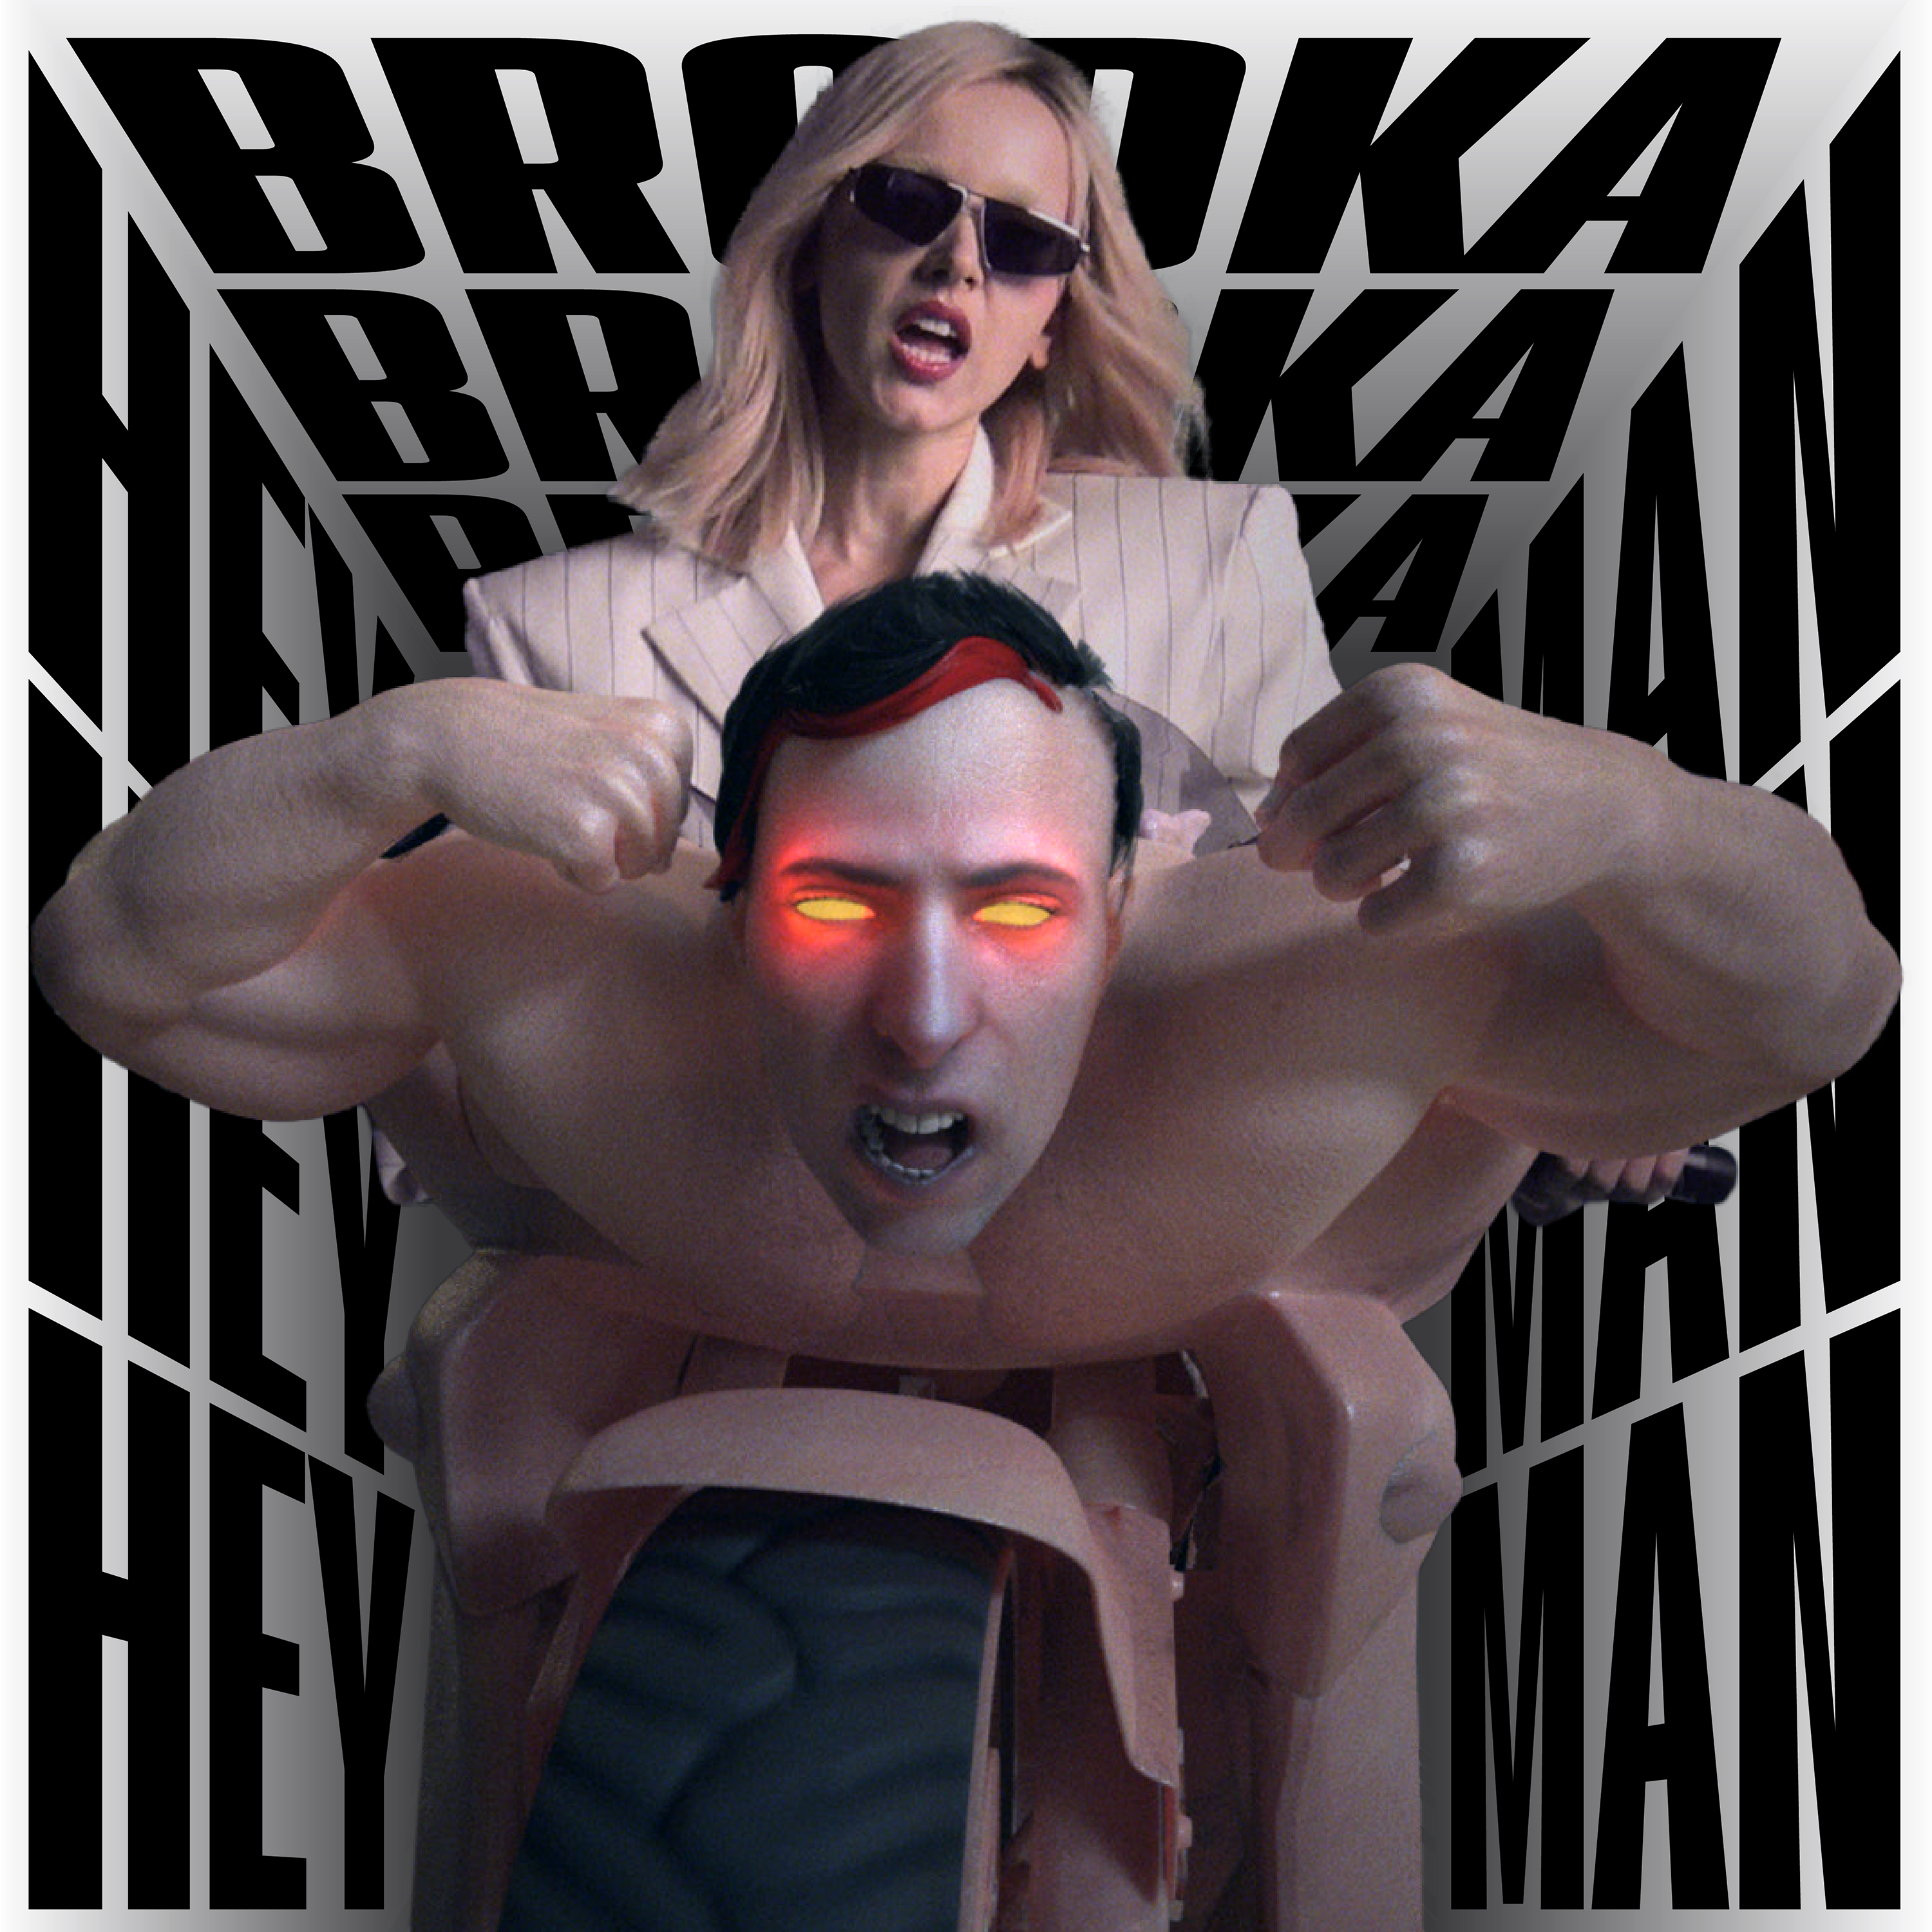 Brodka Hey Man cover artwork